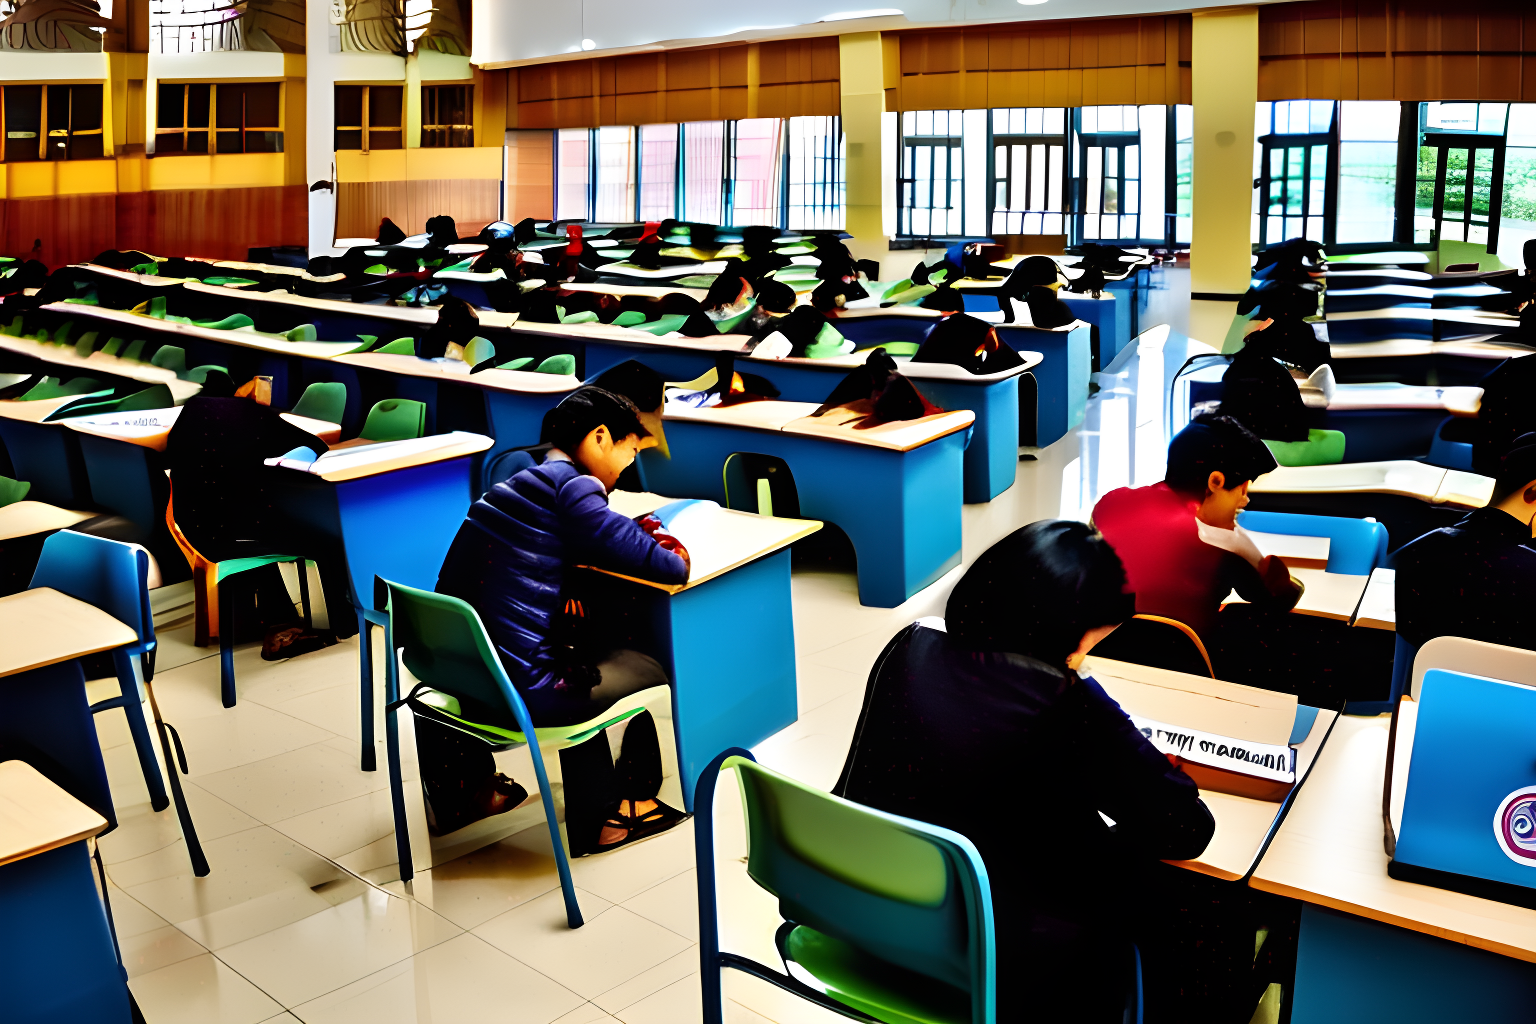 an examination hall of university students